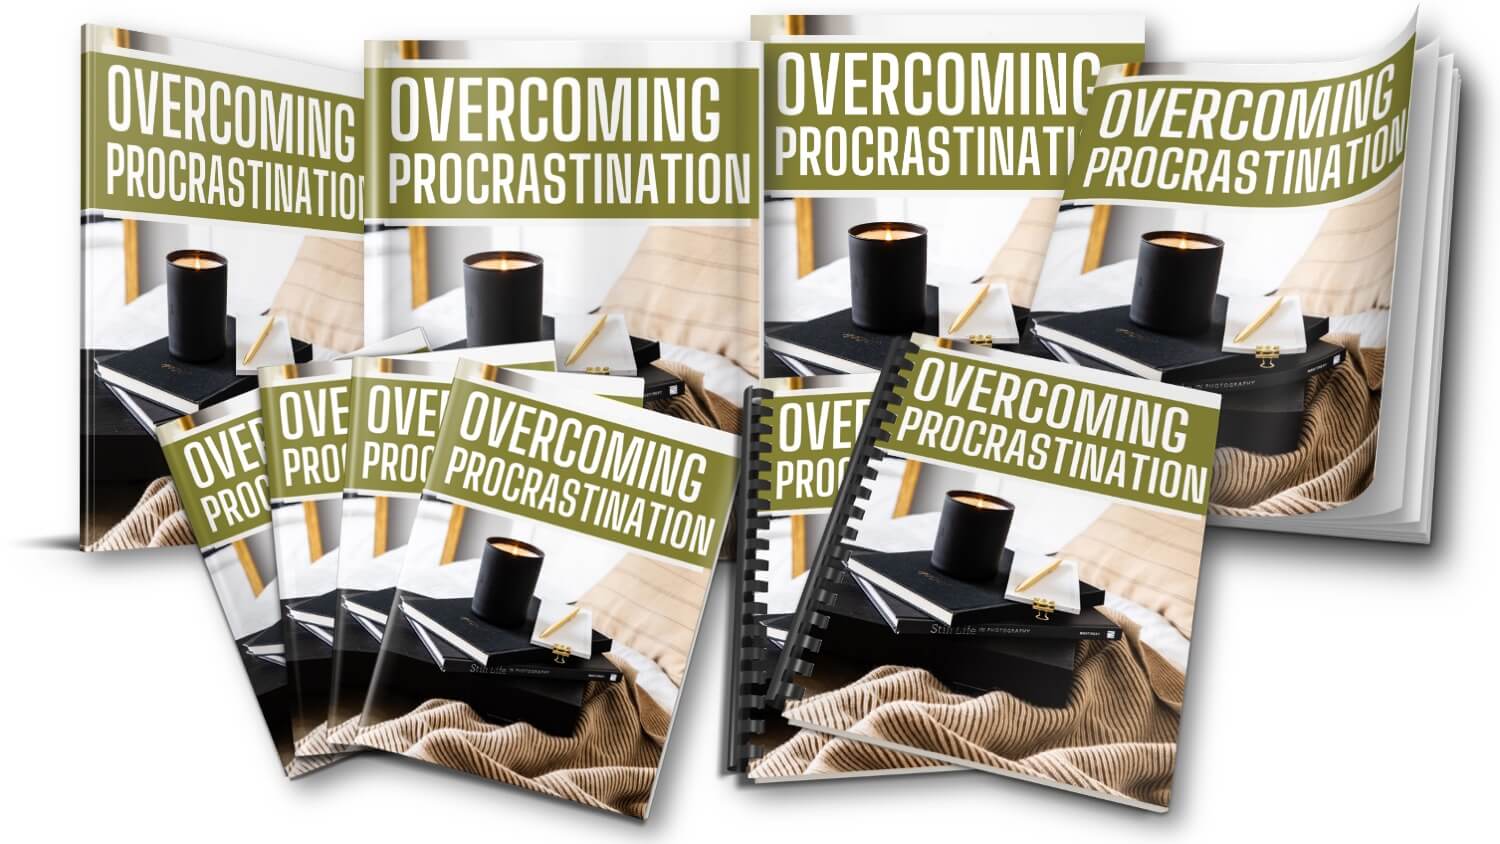 Overcoming Procrastination Report PLR composite marketing images v1